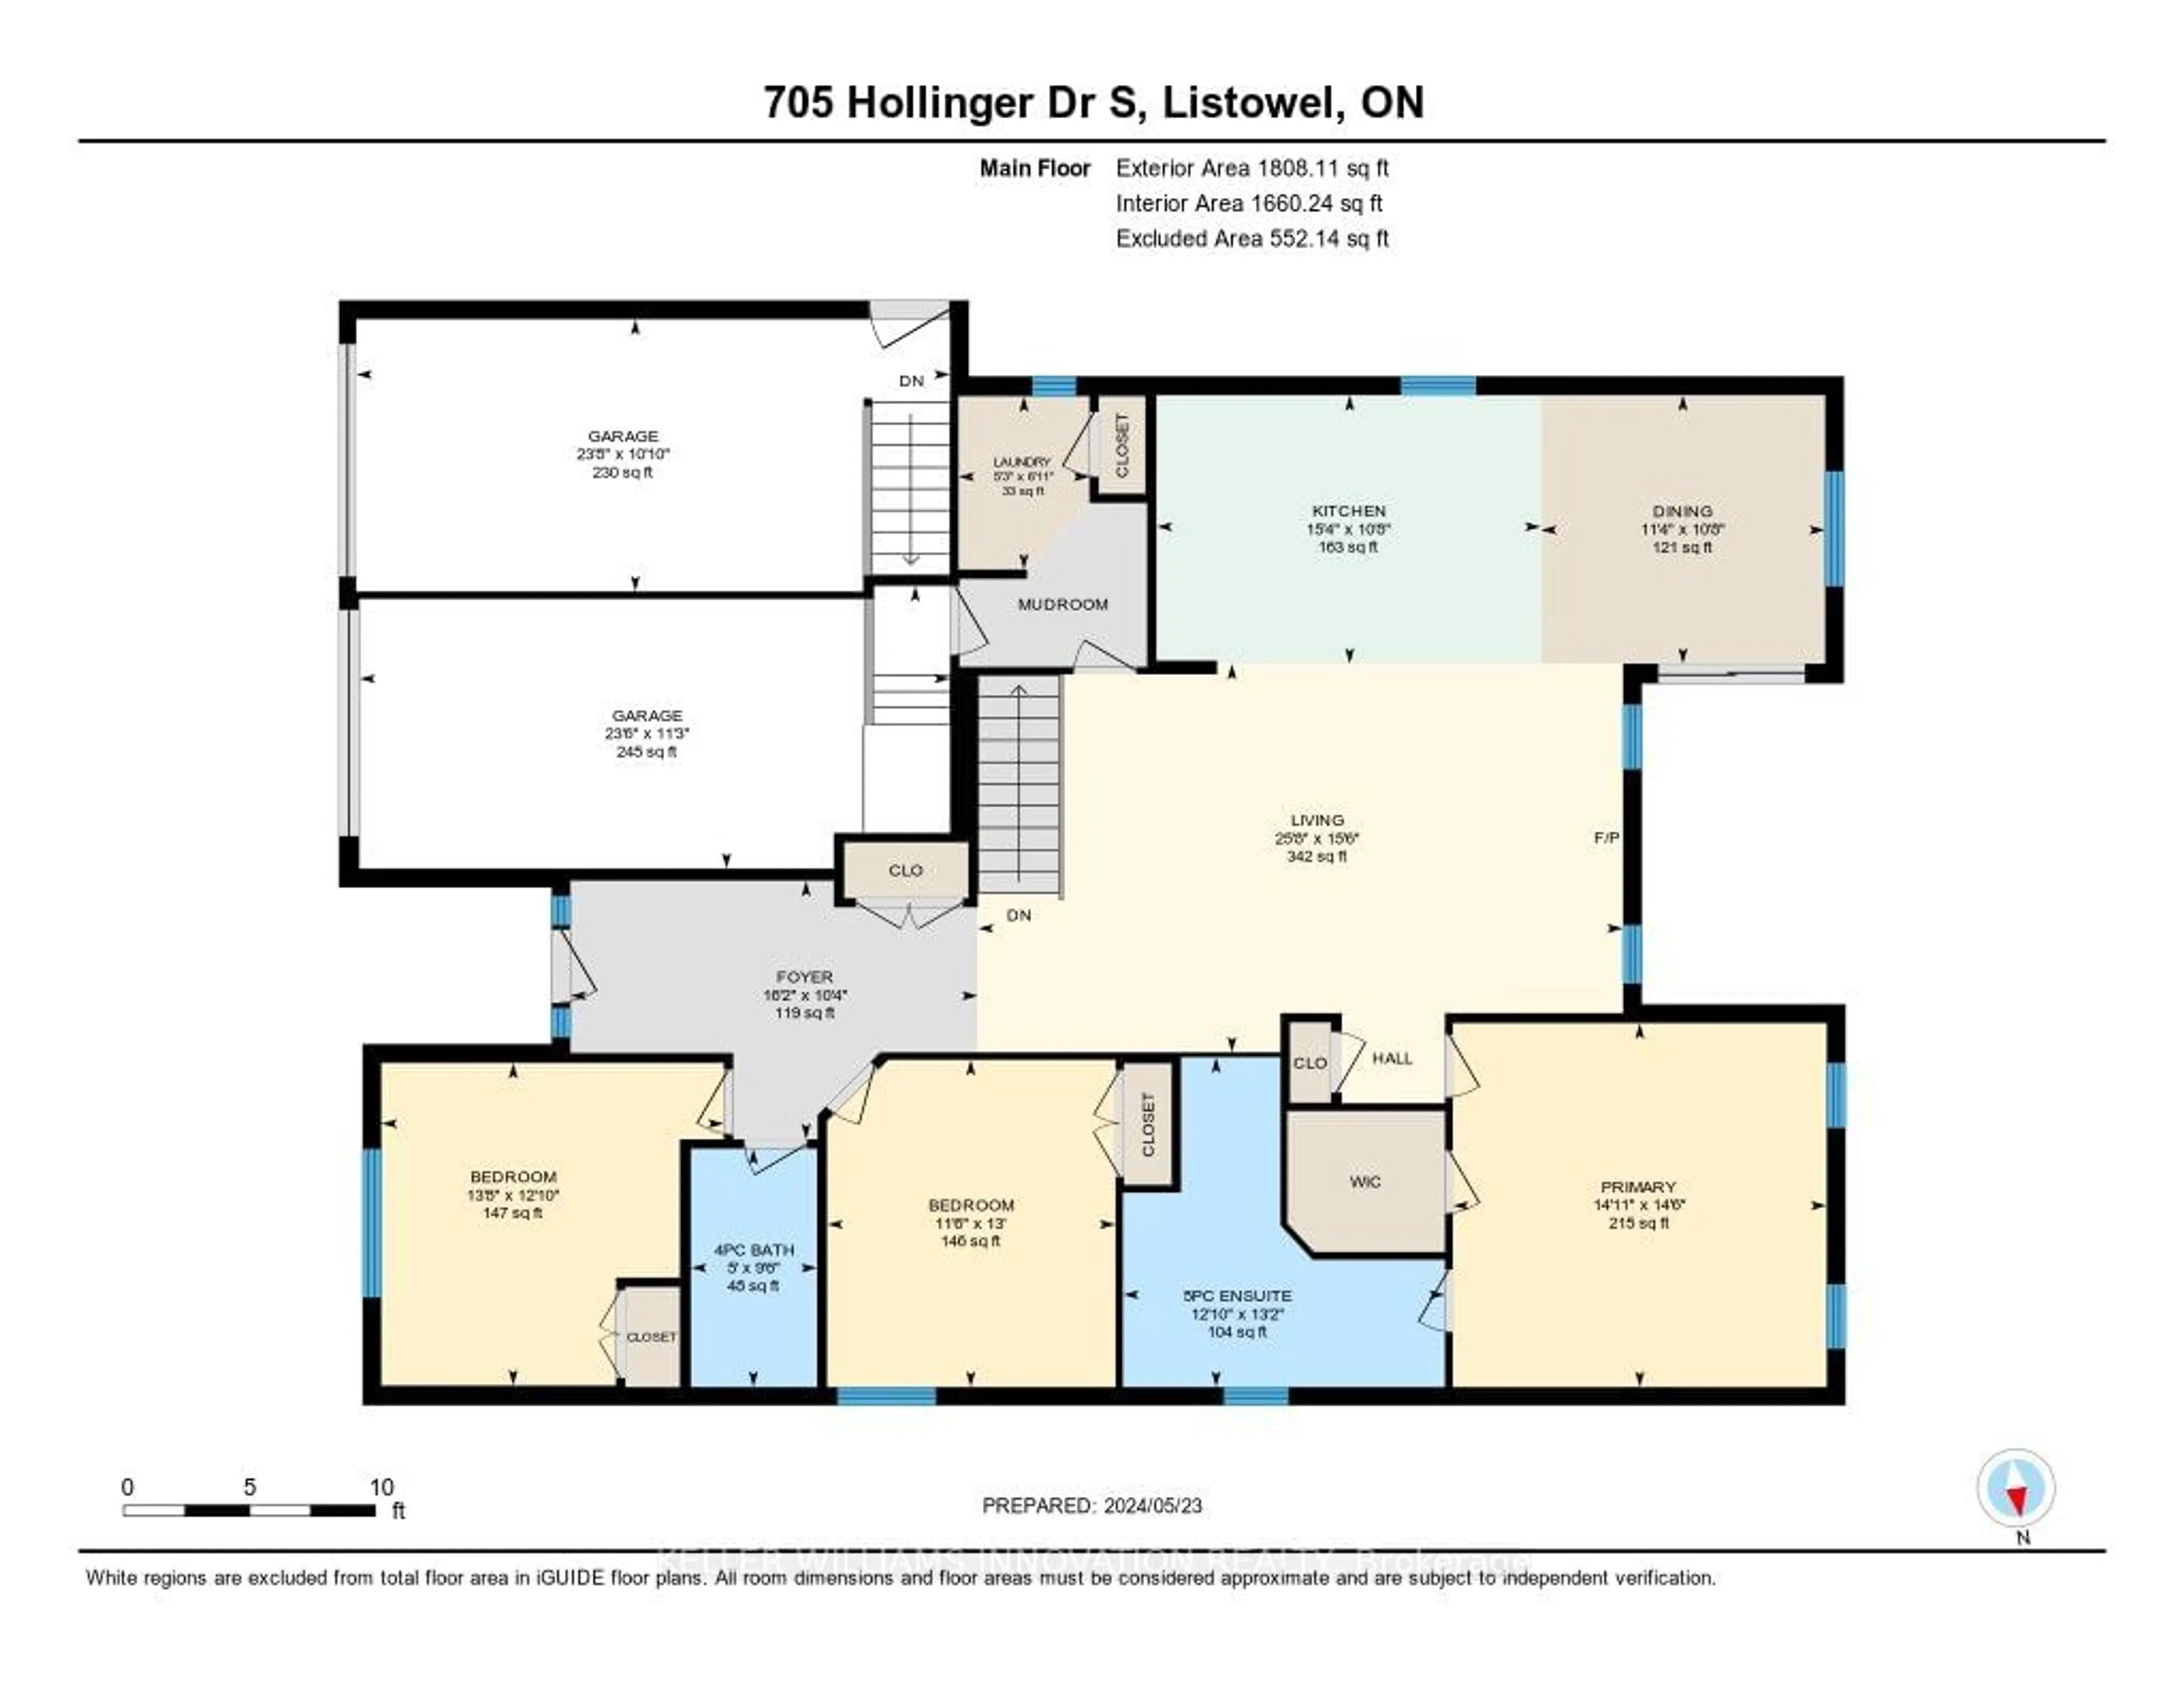 Floor plan for 705 Hollinger Dr, North Perth Ontario N4W 3V2